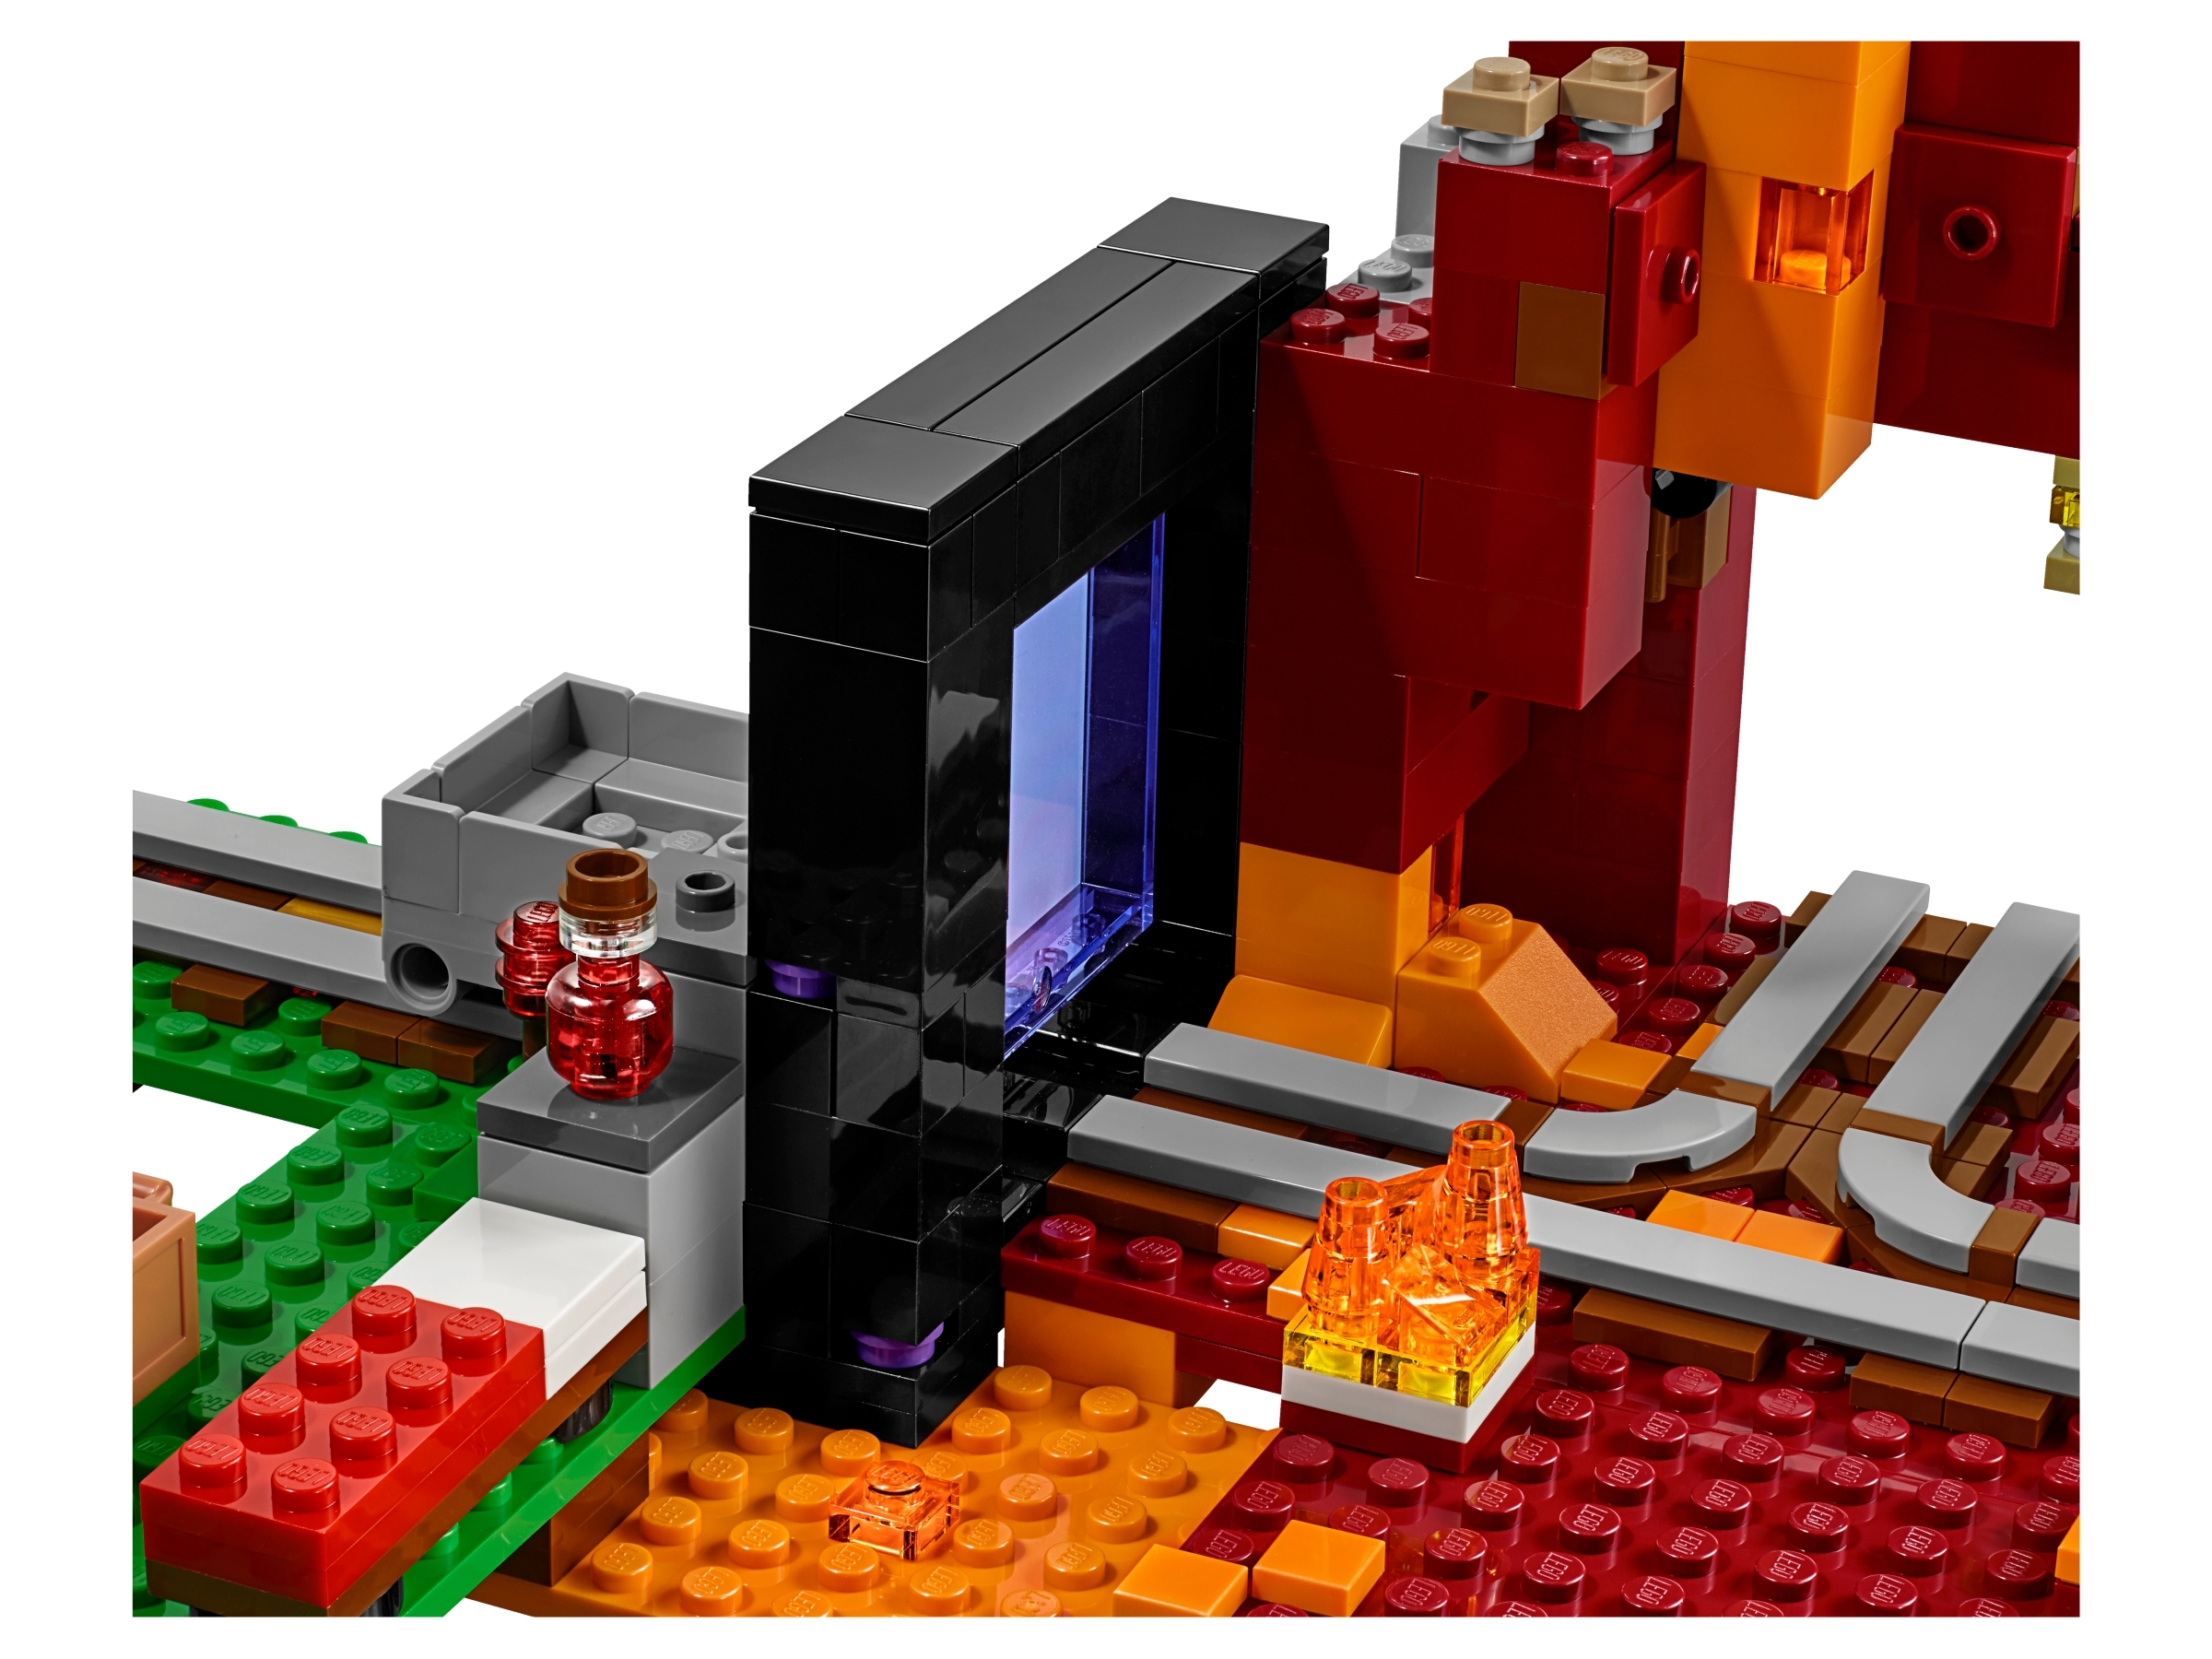 lego minecraft the nether portal 21143 building kit